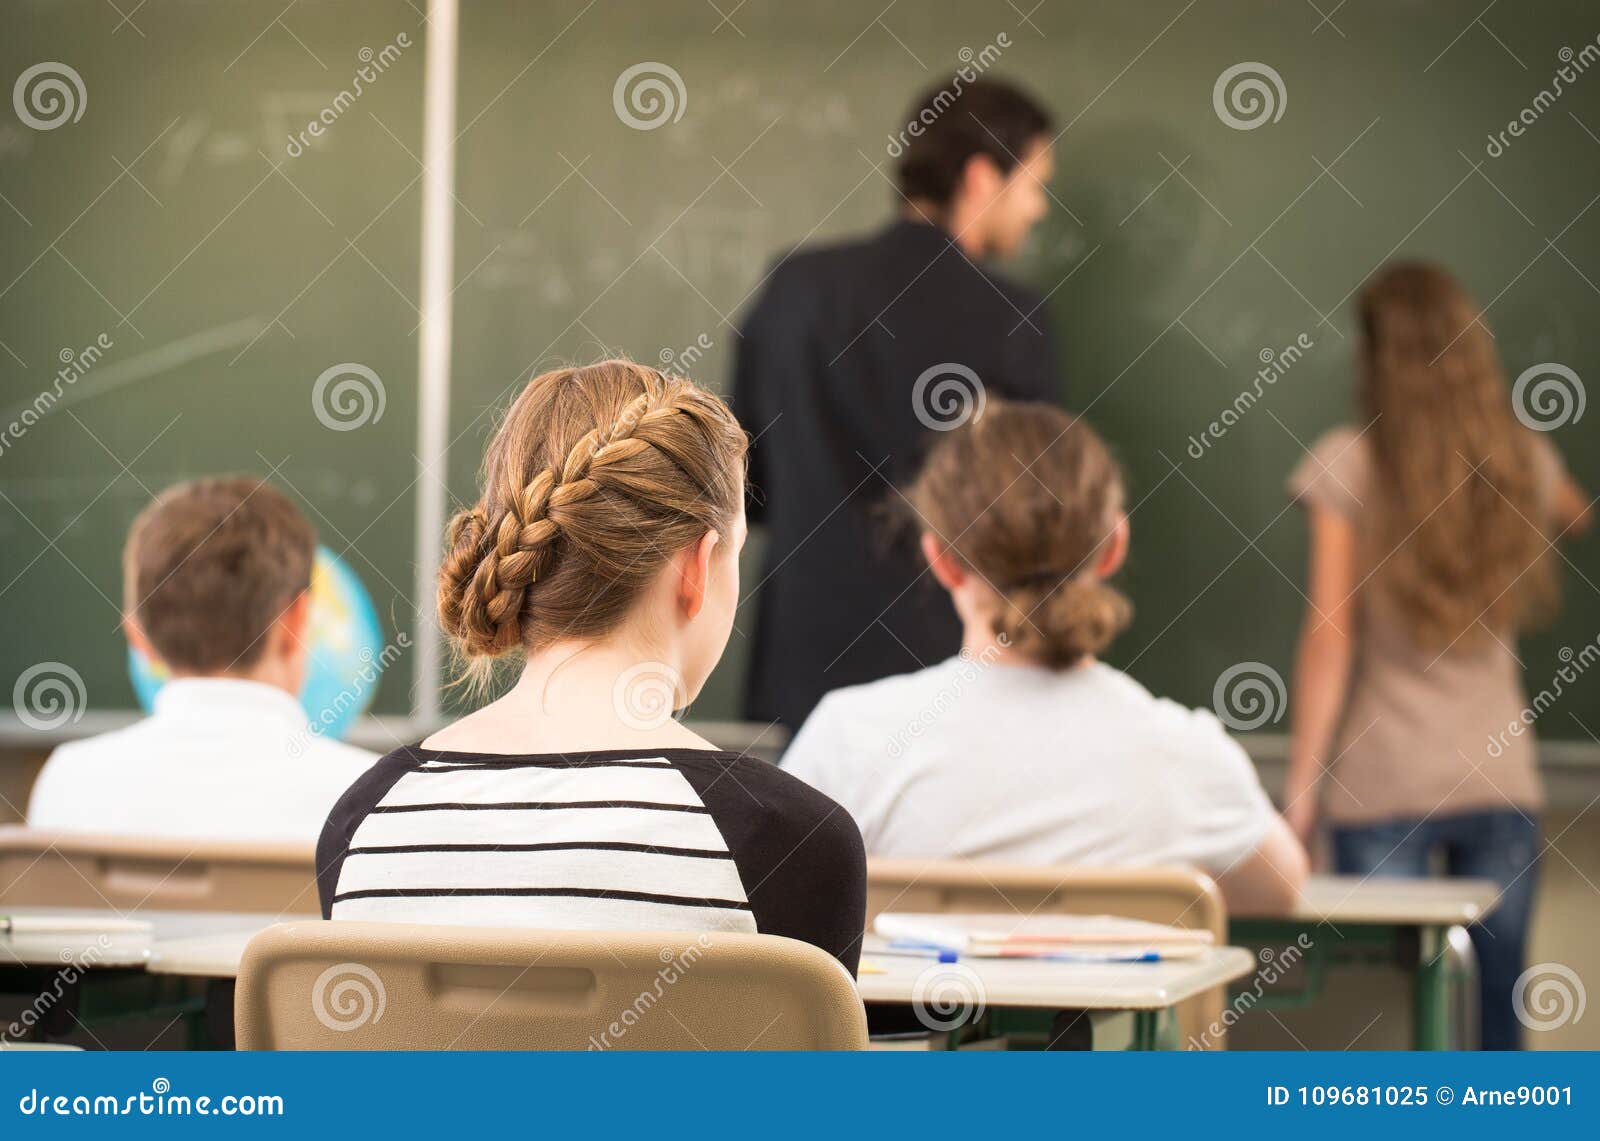 rteacher teaching or educate at the board a class in schoolr